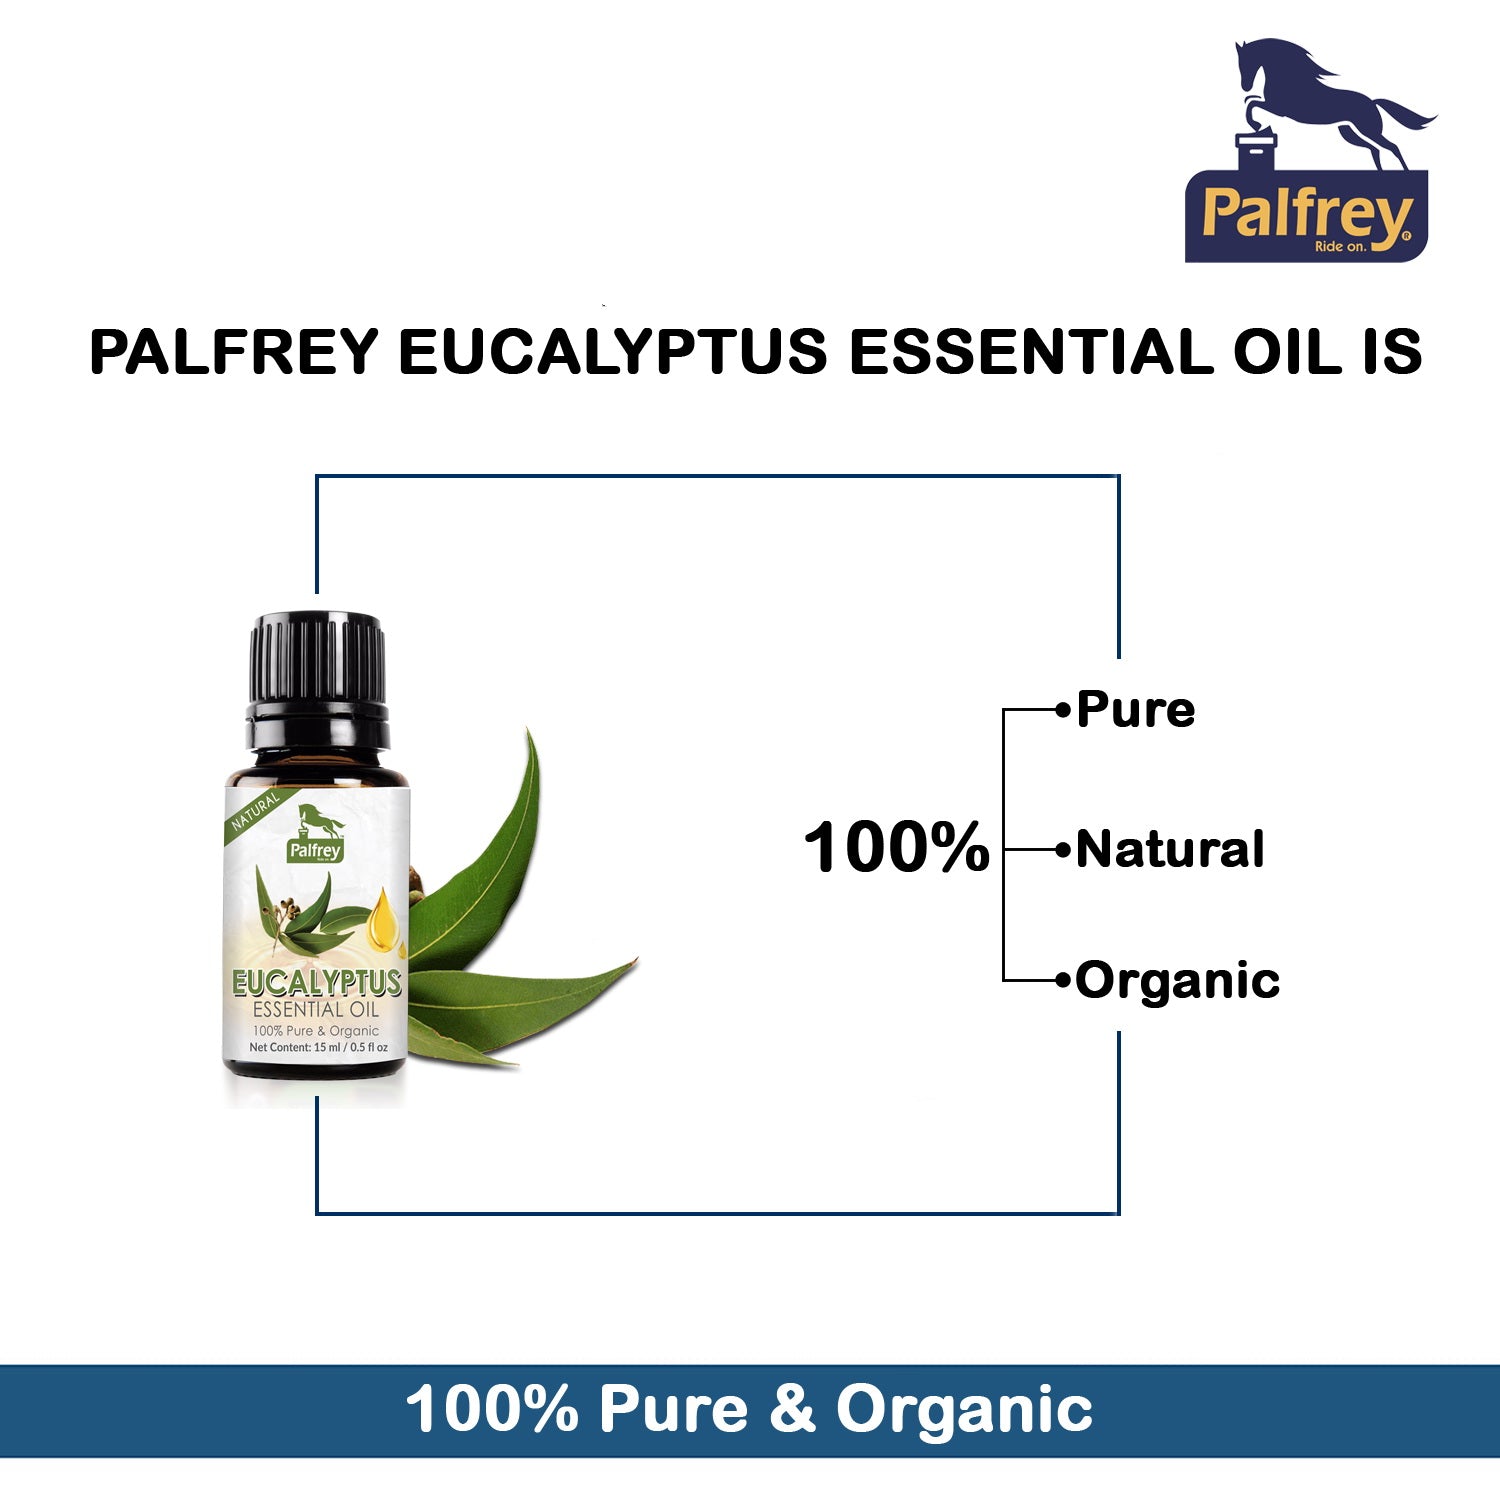 Palfrey Natural Eucalyptus Essential Oil 15ml